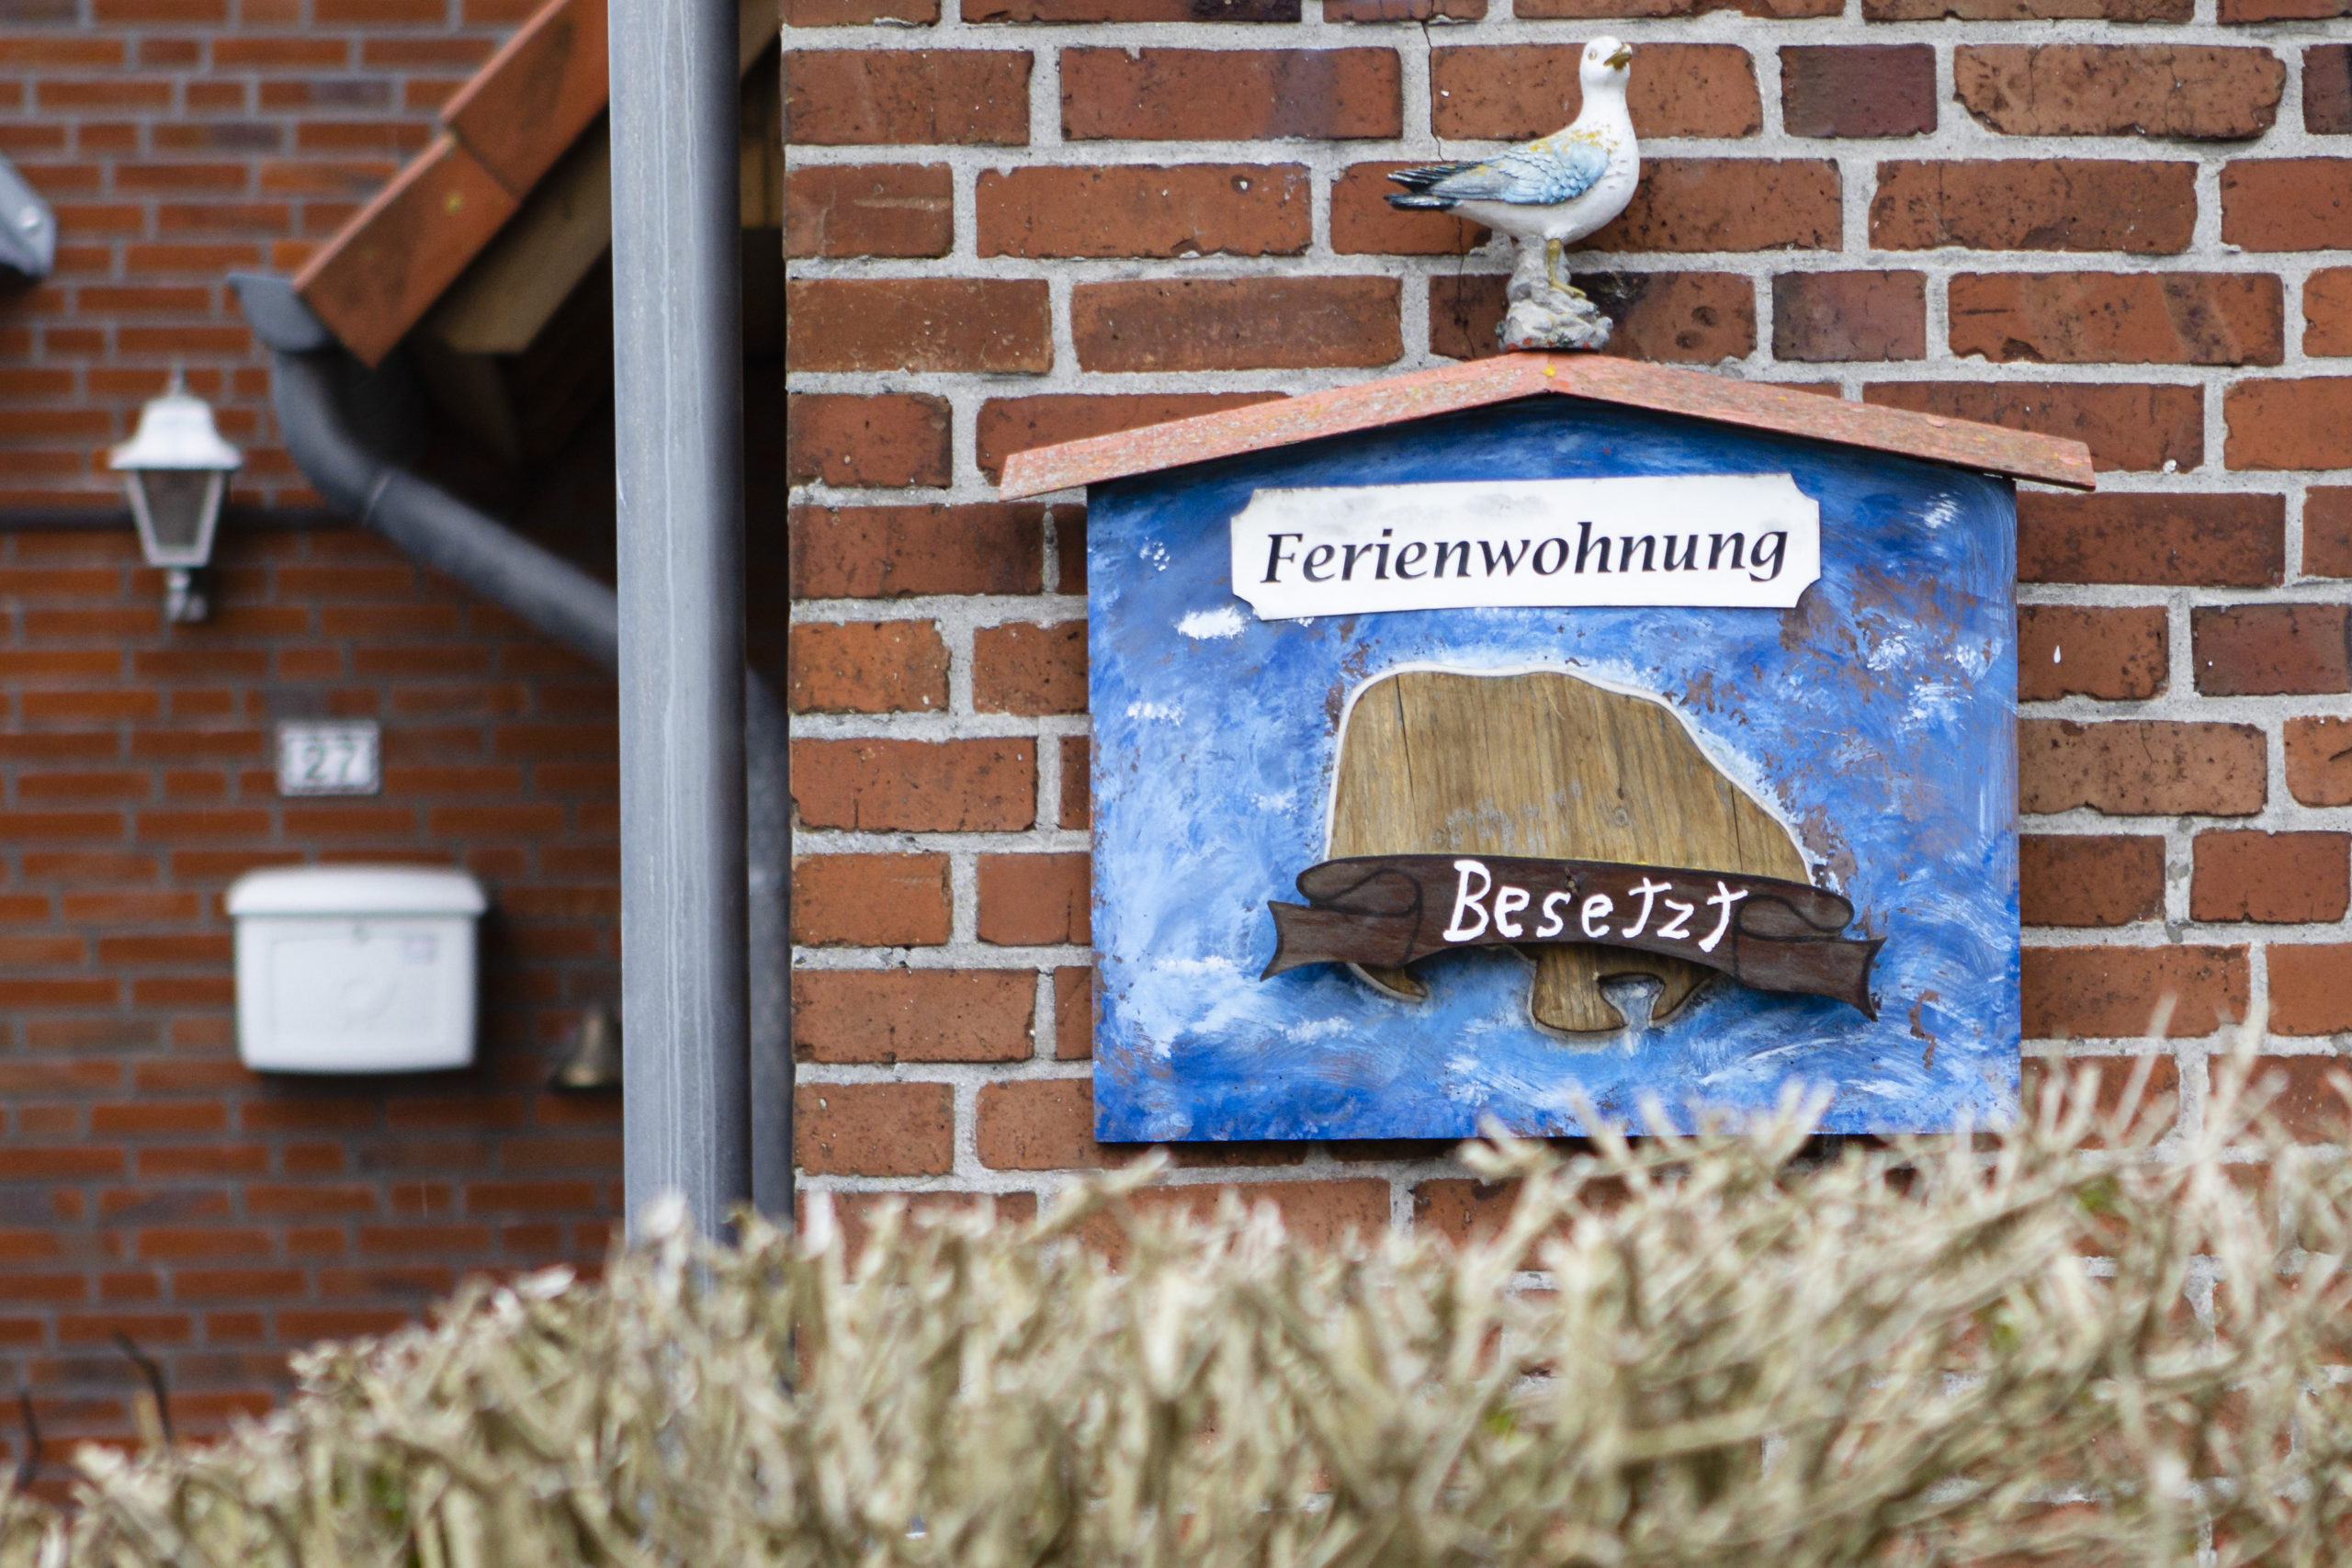 A holiday apartment near Fehmarn, Schleswig-Holstein.